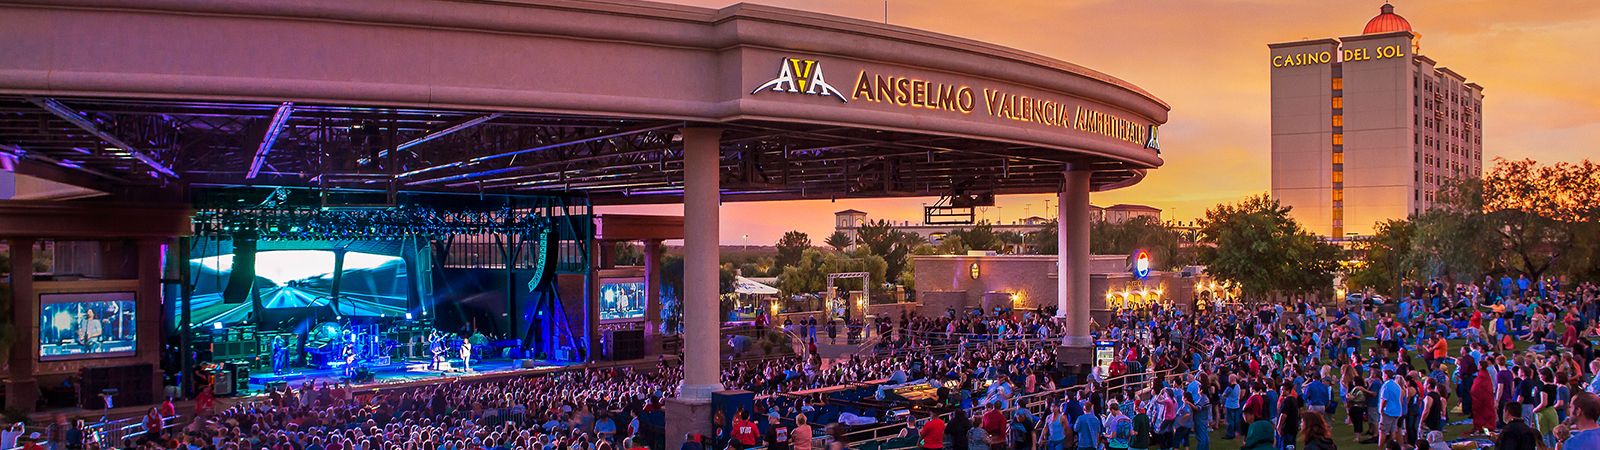 AVA Amphitheater Concerts at Casino Del Sol